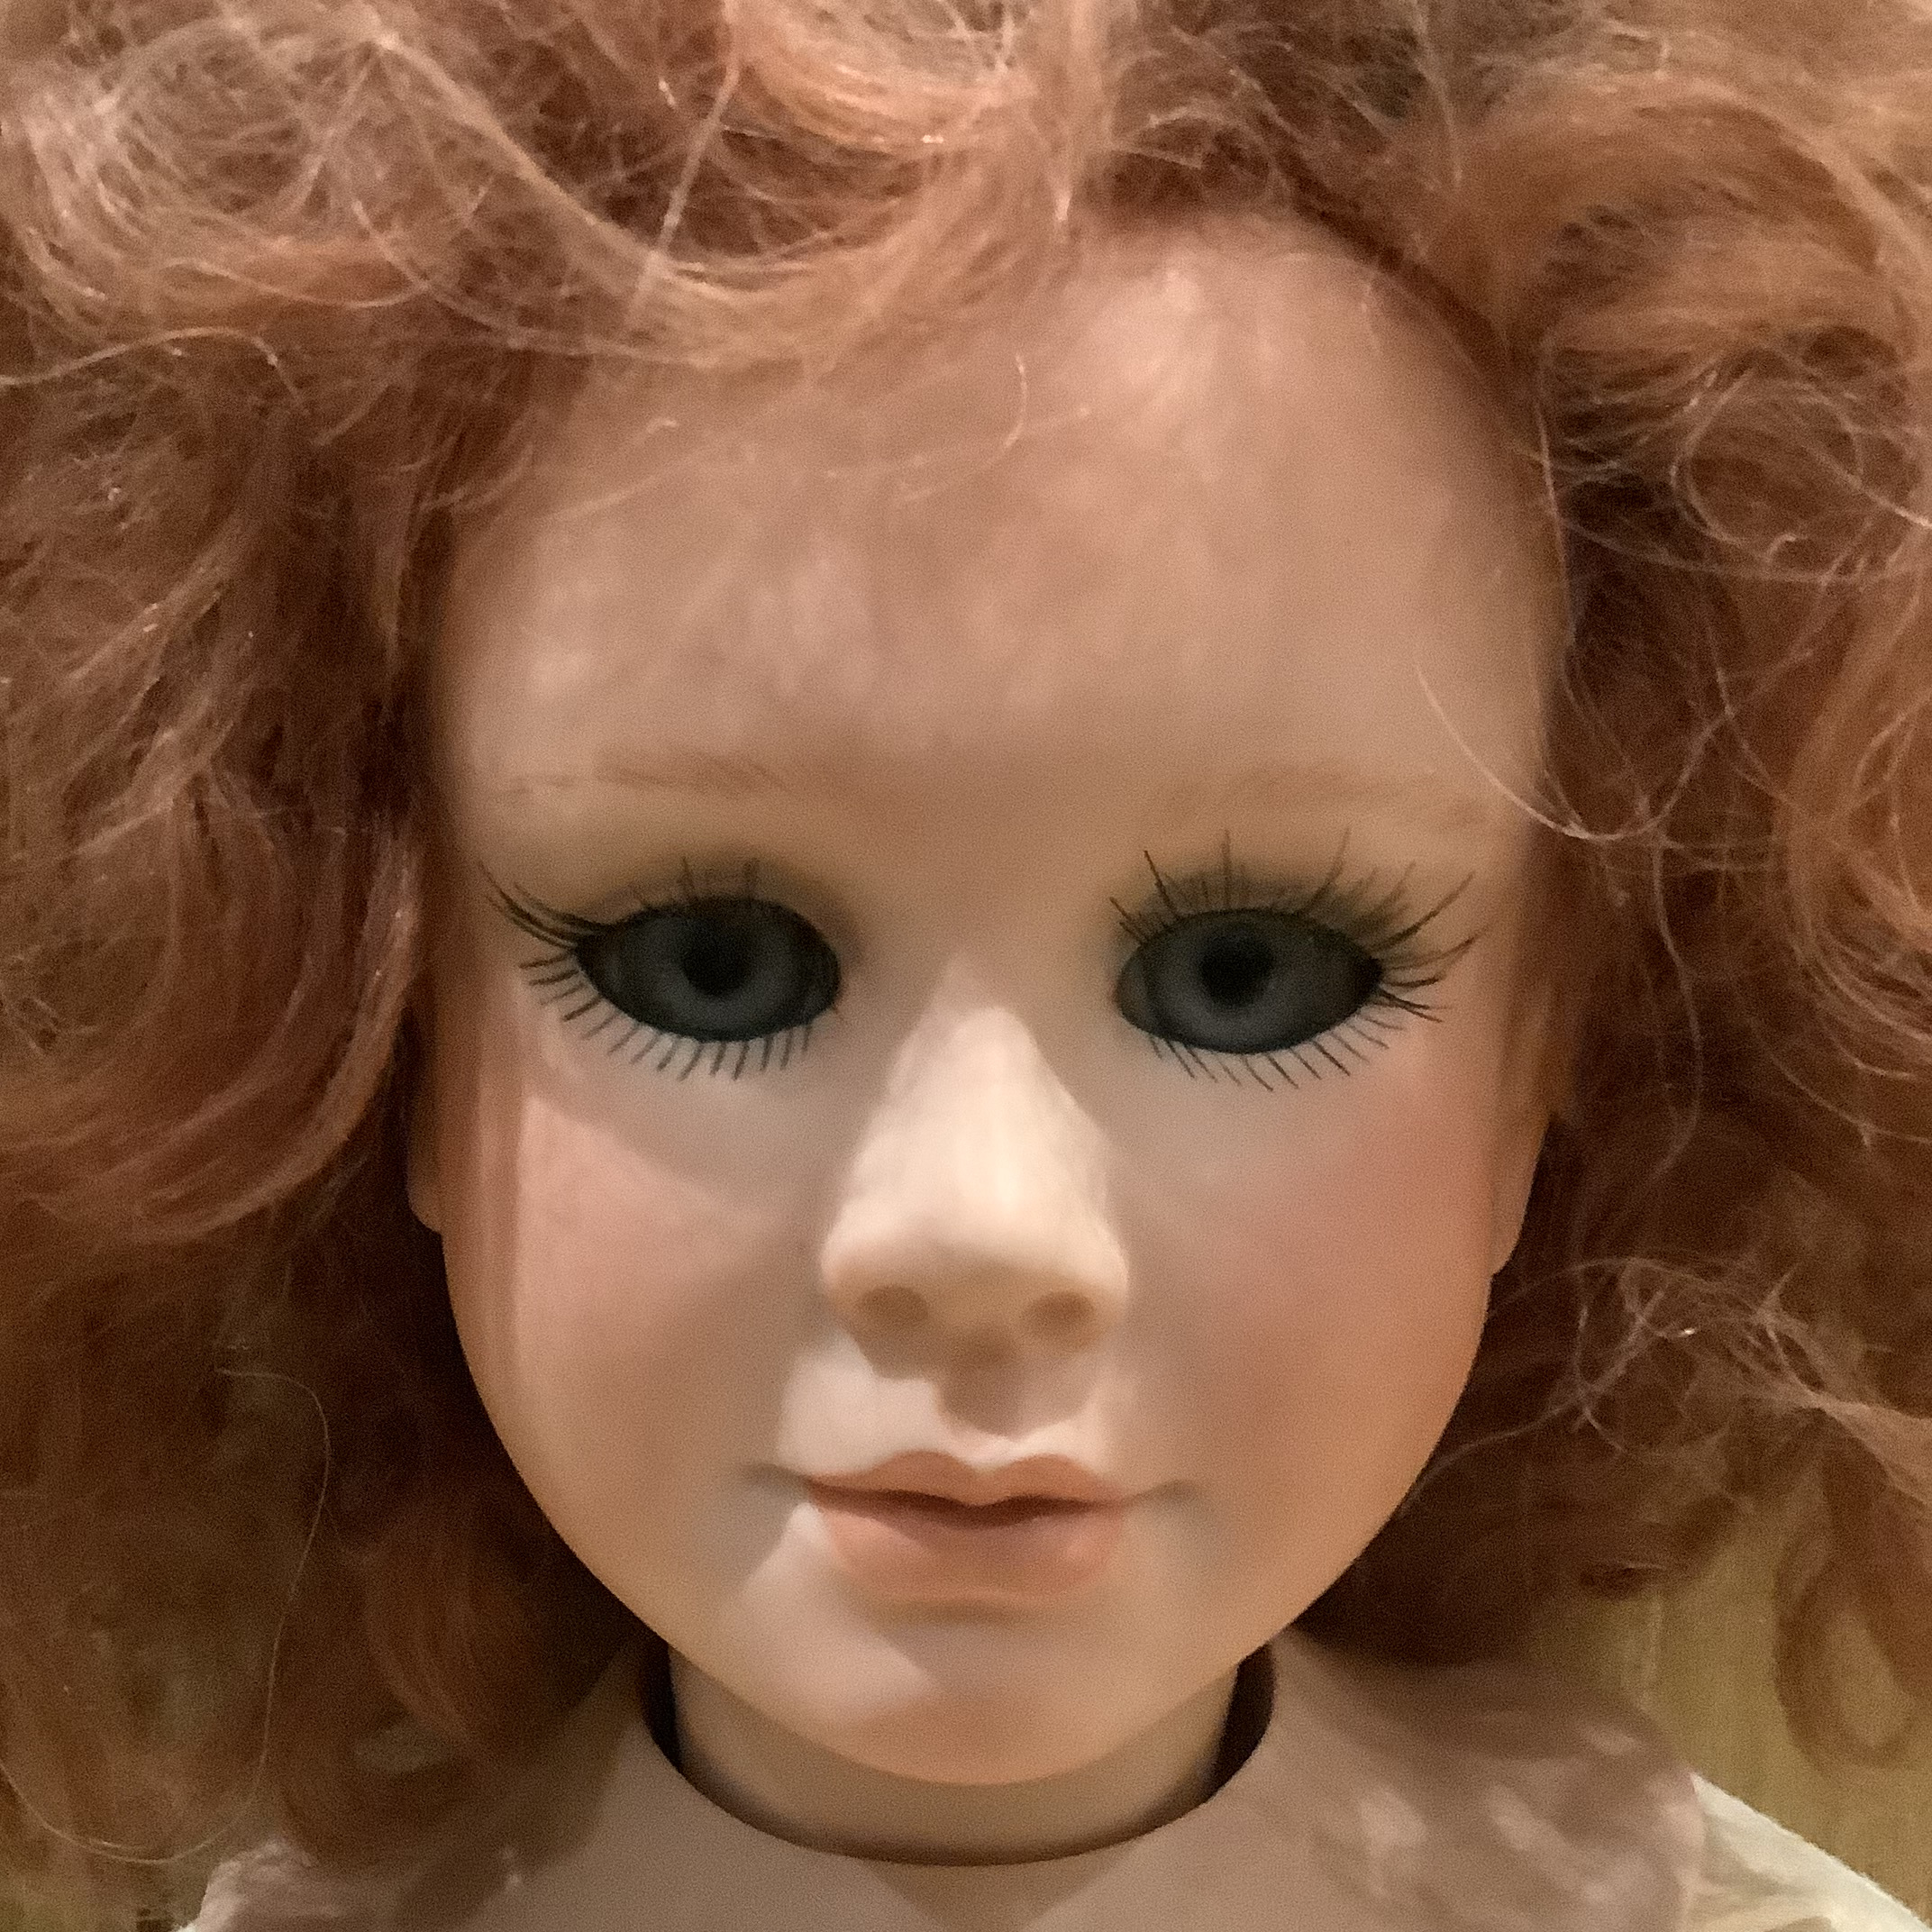 Lady doll face with dark blue eyes